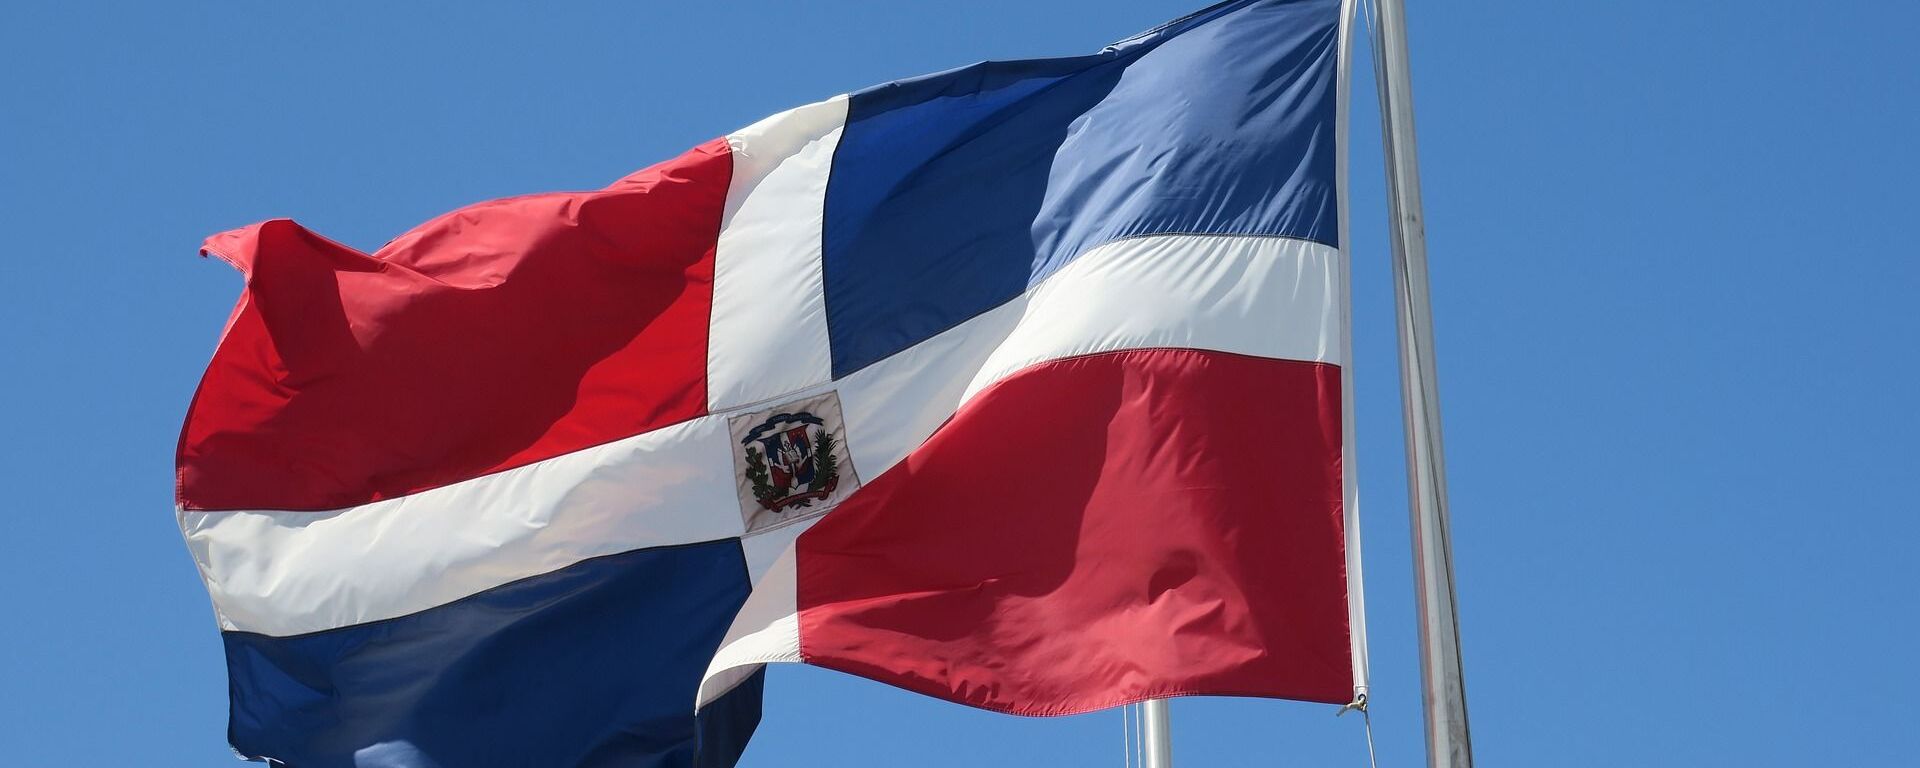 La bandera de la República Dominicana - Sputnik Mundo, 1920, 01.03.2022